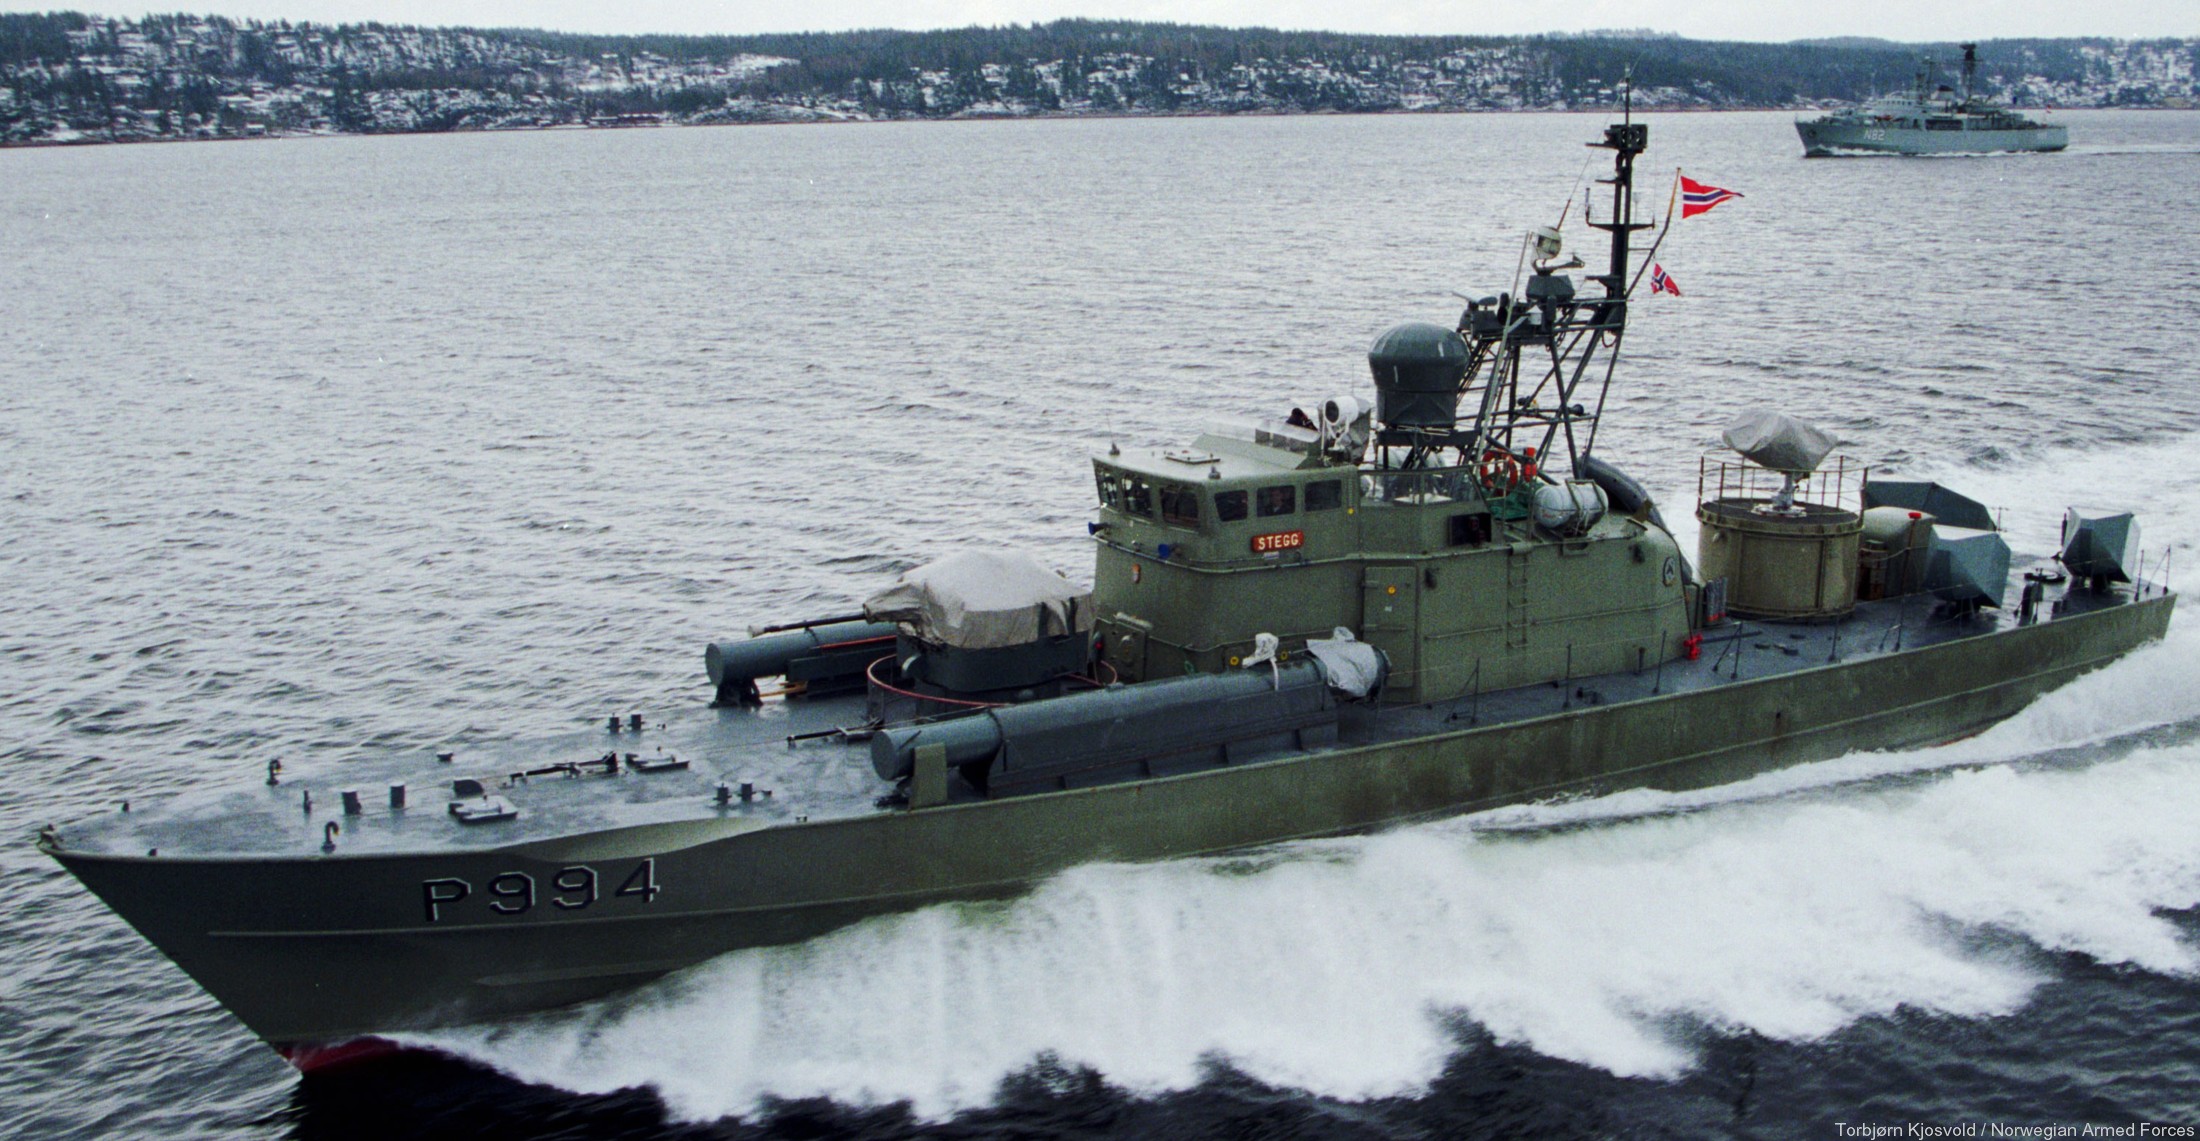 p-994 knm stegg hauk class fast attack missile torpedo craft boat norwegian navy sjøforsvaret 04